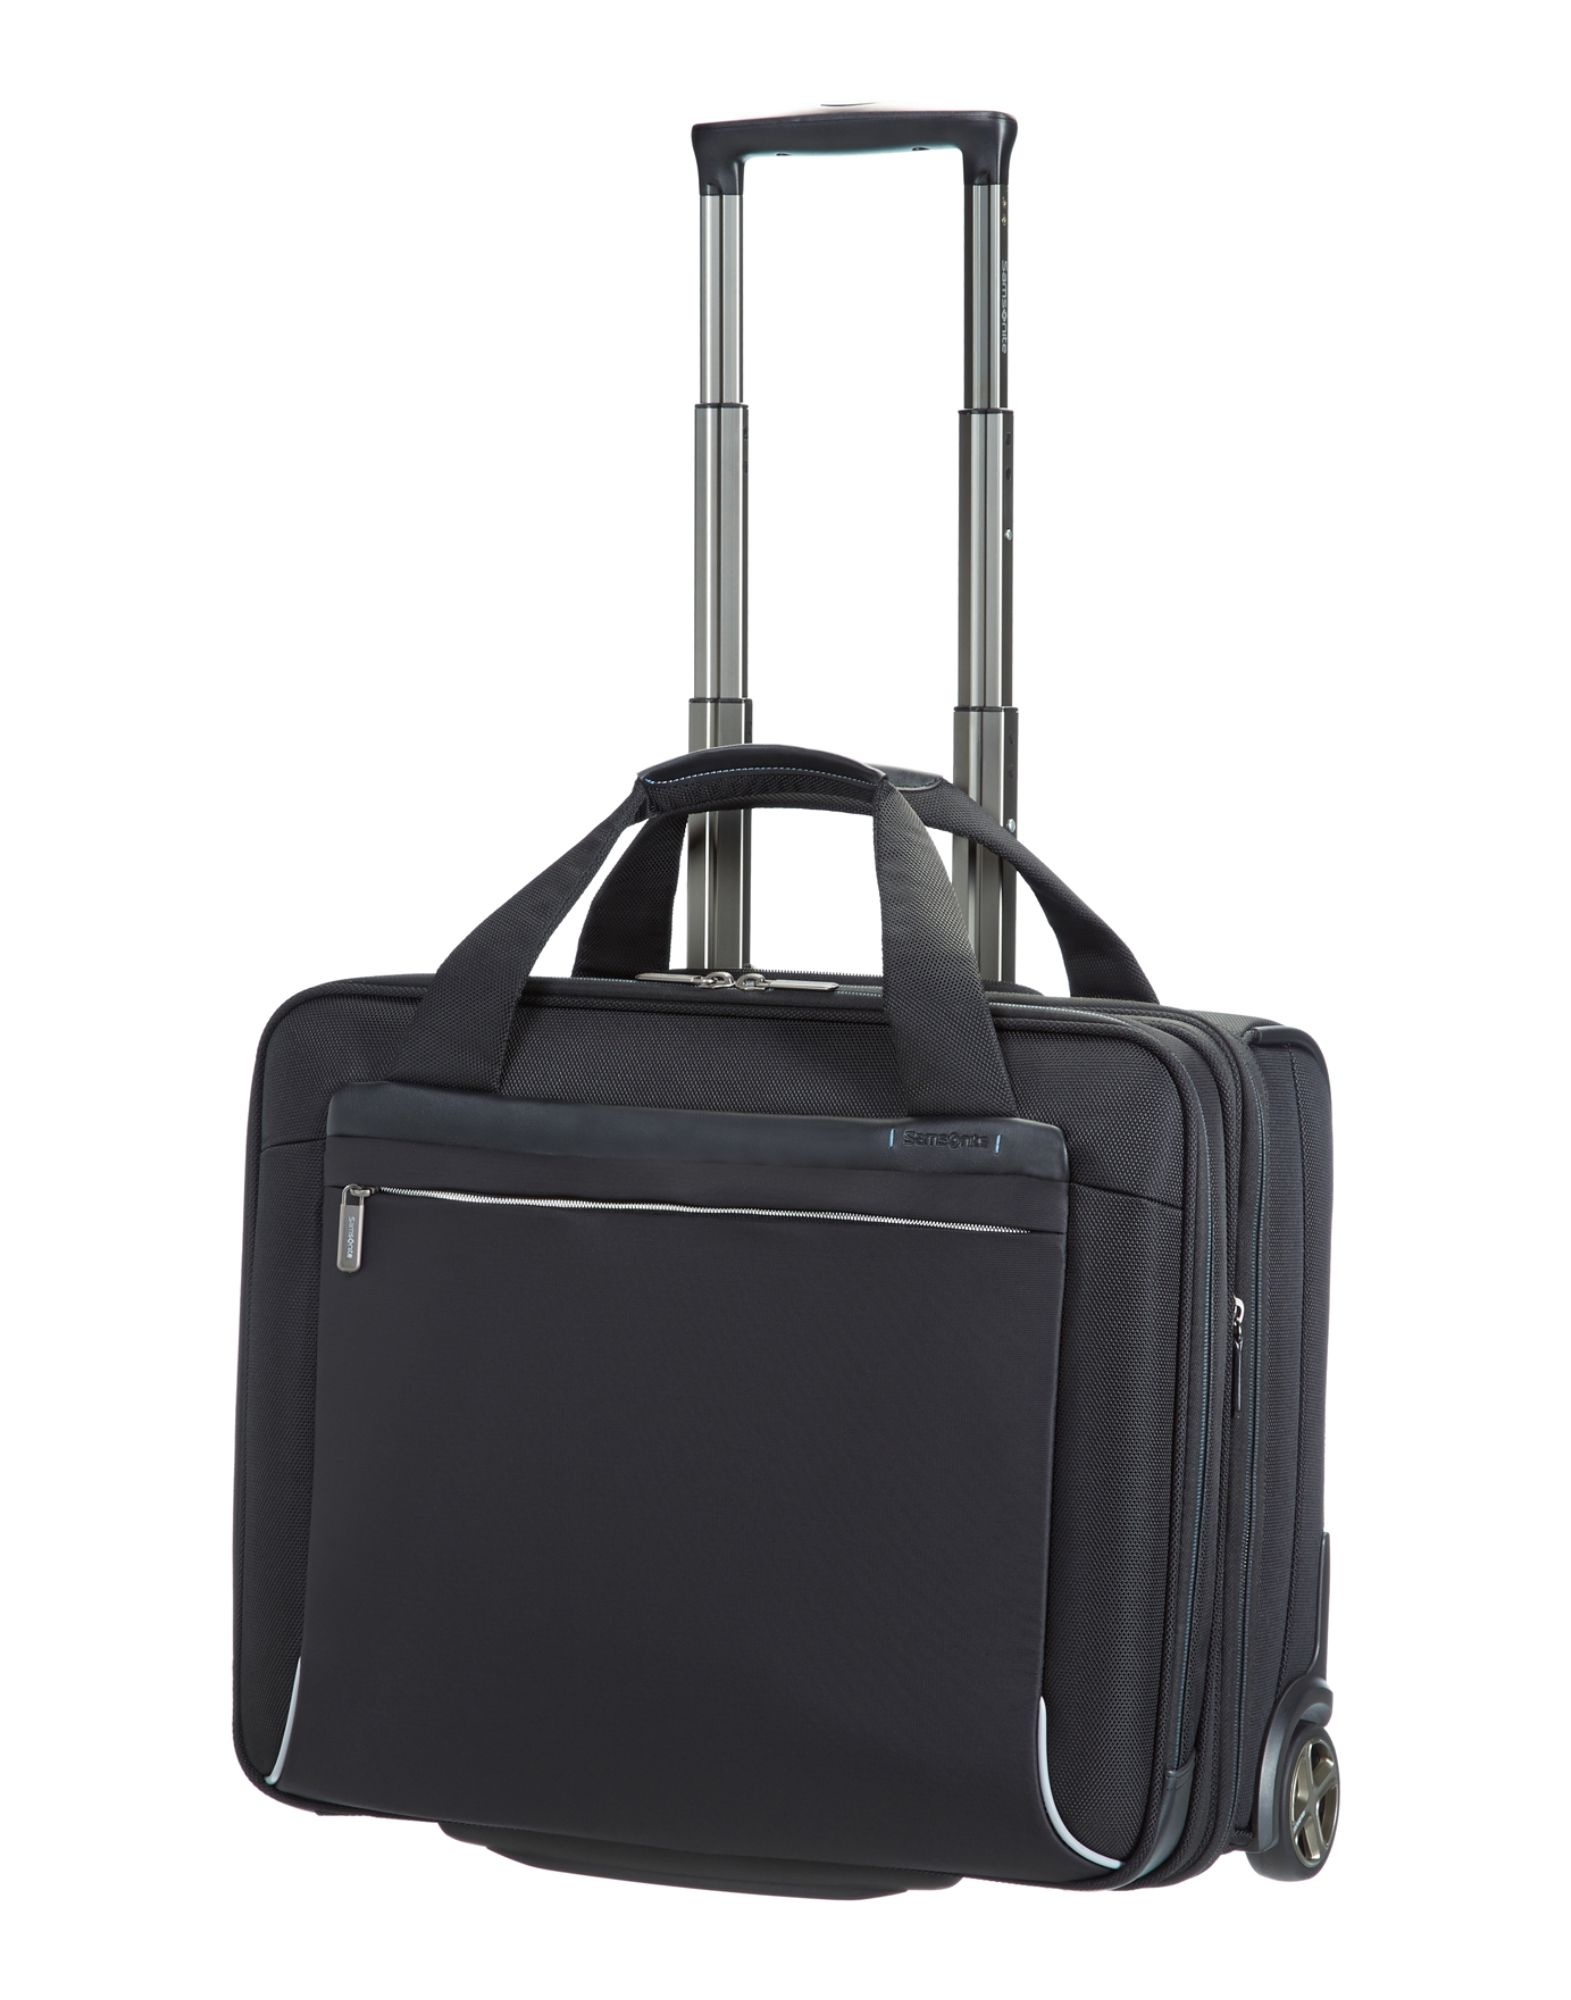 Lyst - Samsonite Wheeled Luggage in Black for Men